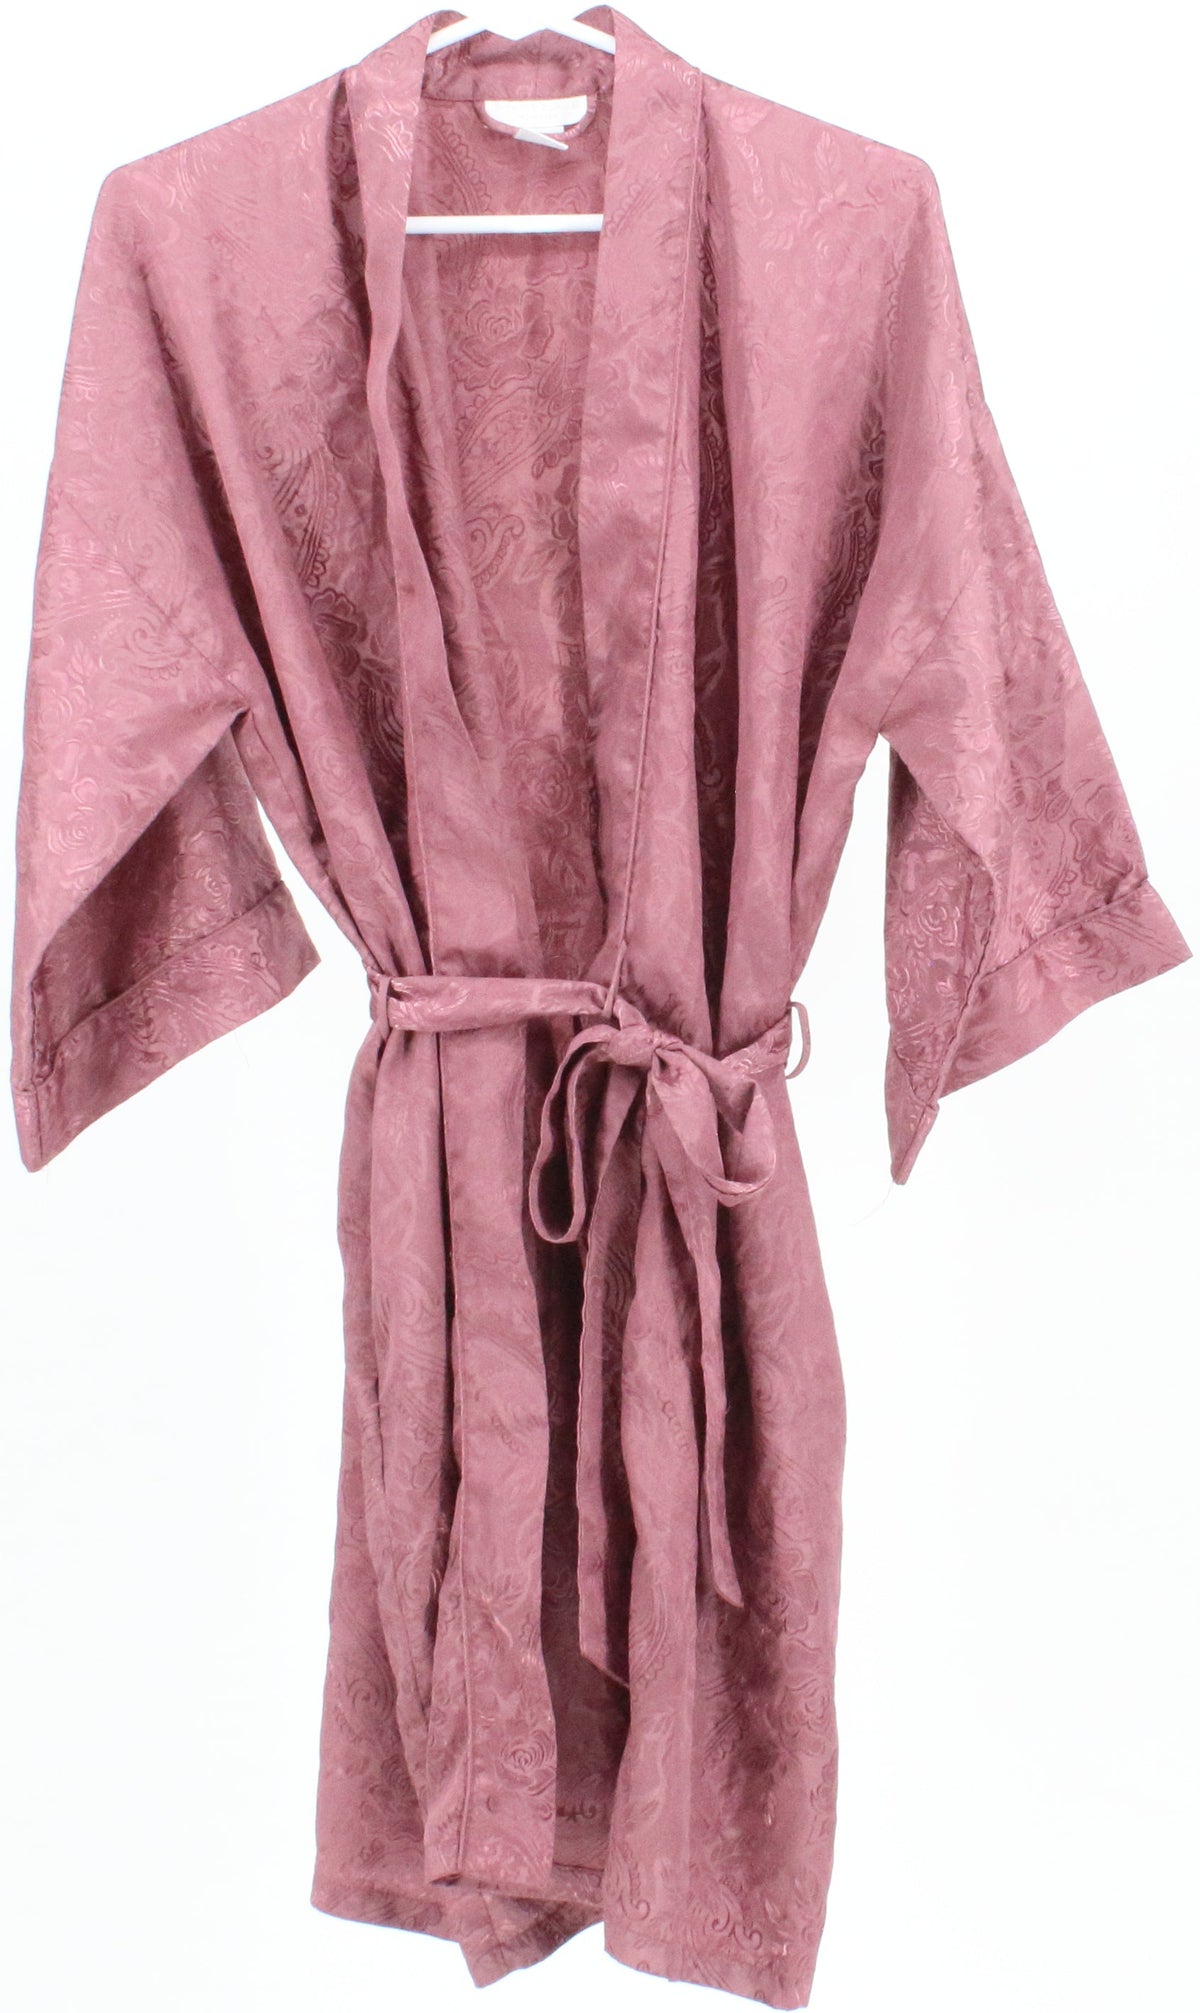 Mystique Intimates Pink Robe